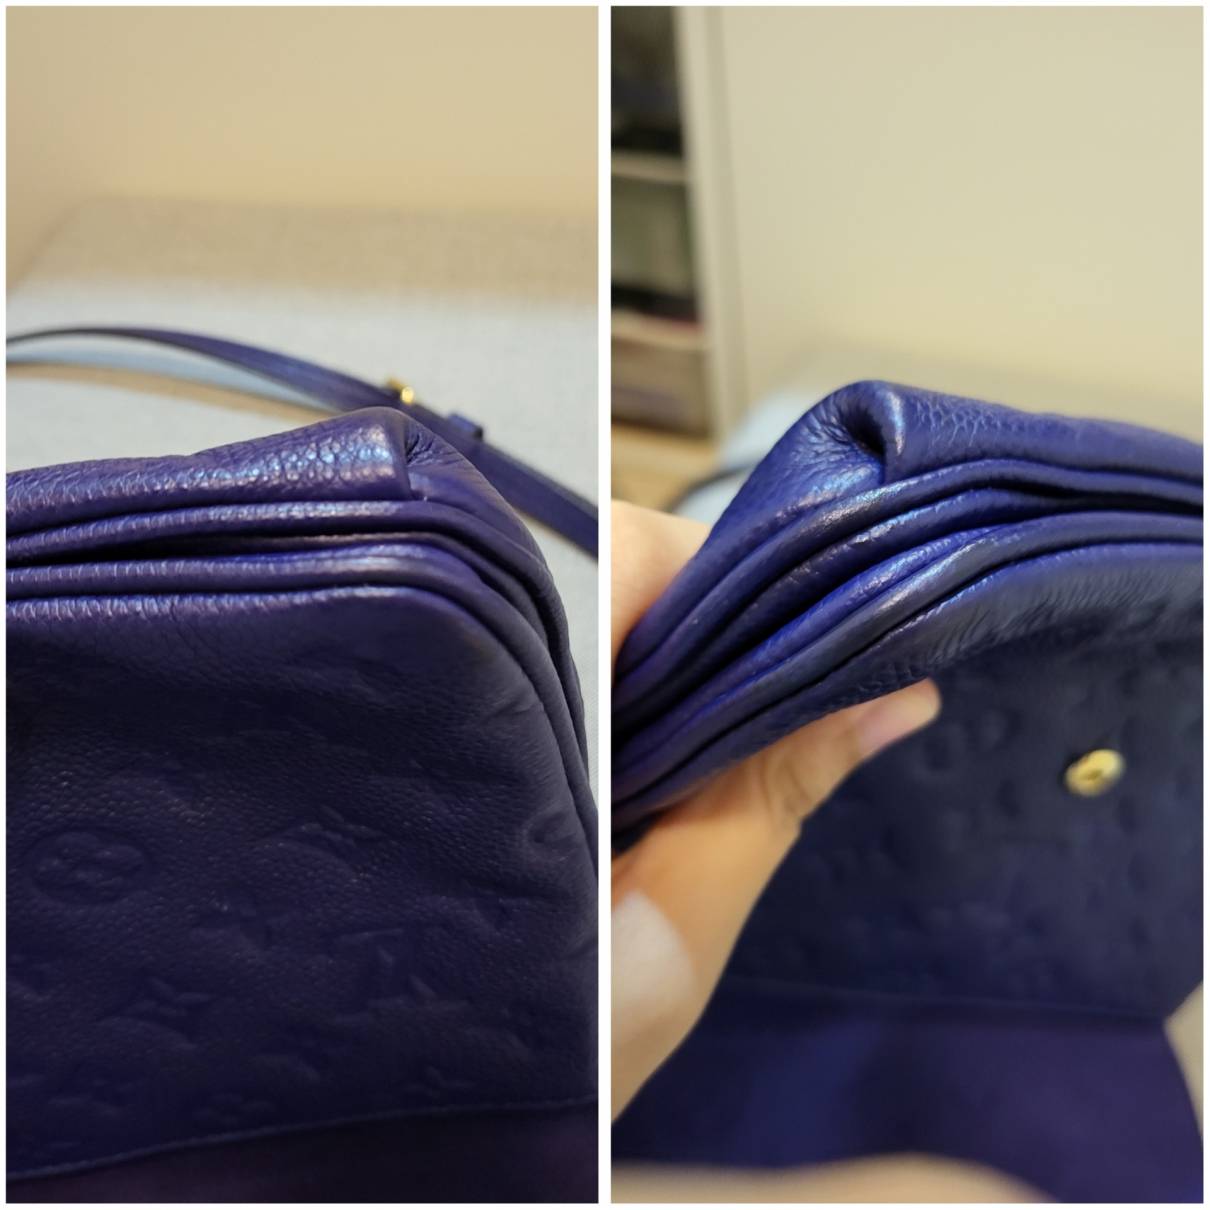 Louis Vuitton - Authenticated Twice Handbag - Leather Blue Plain for Women, Very Good Condition